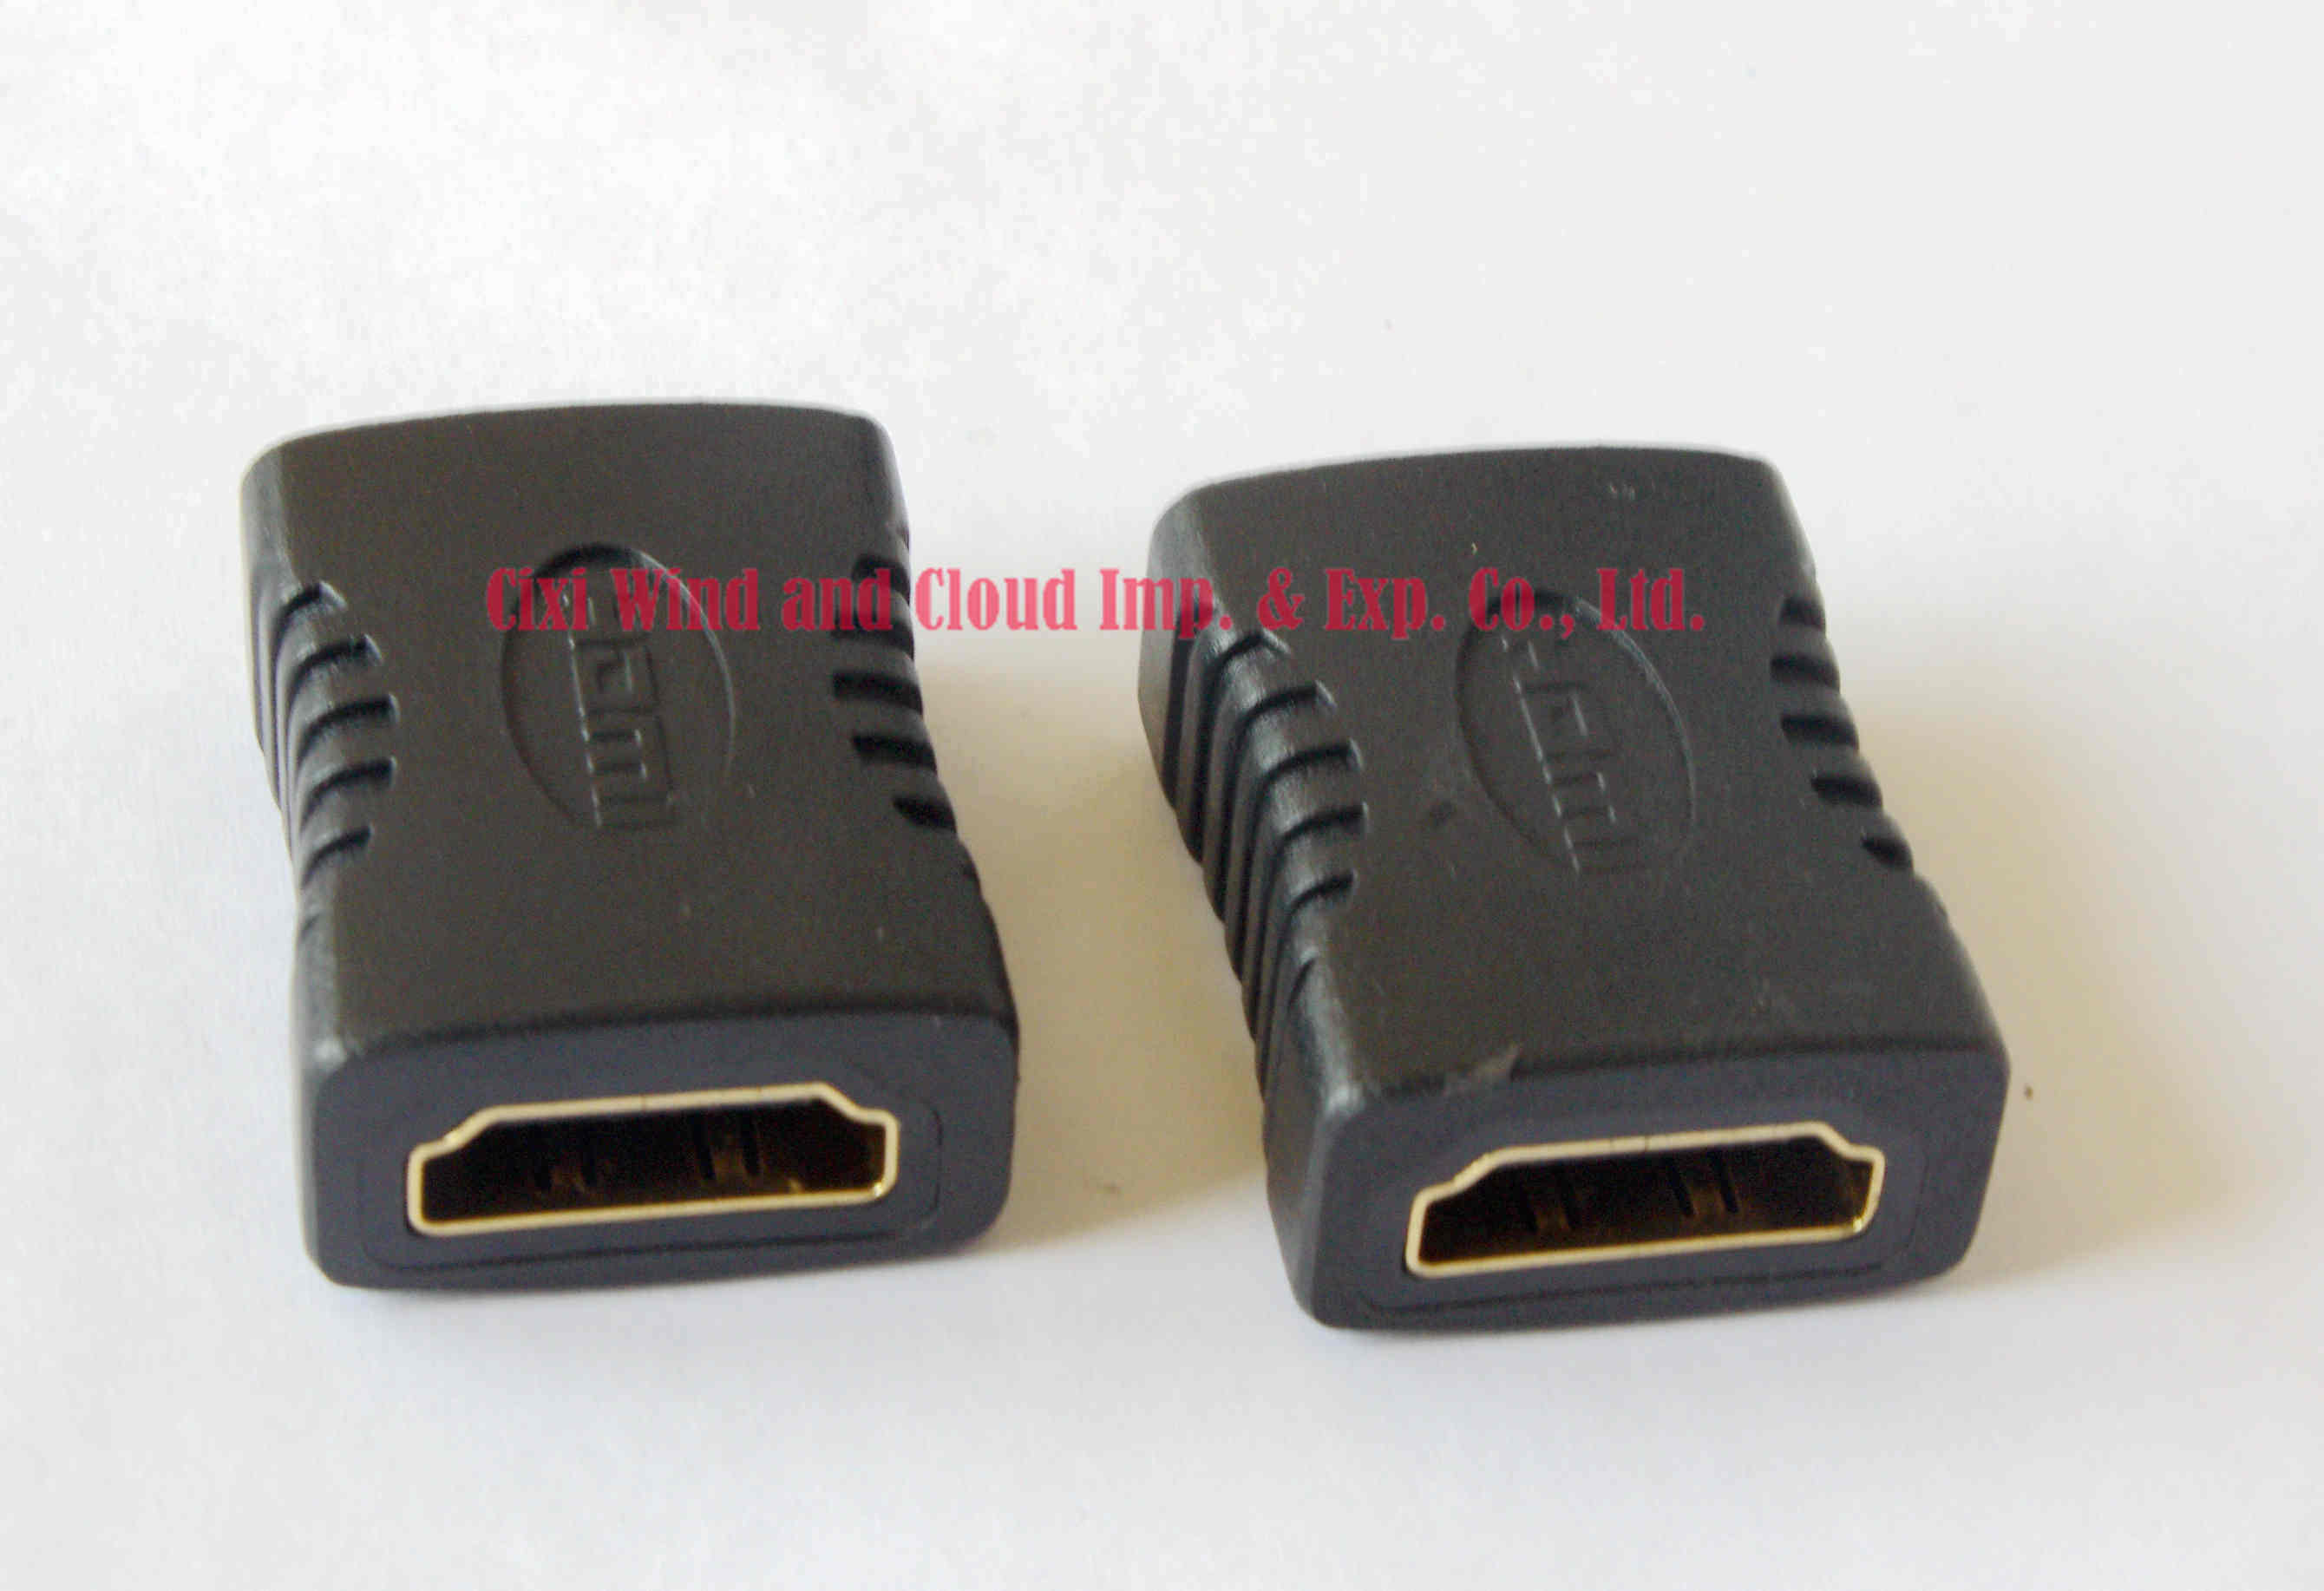 HDMI Female to HDMI Female Adapter (HHA-001)